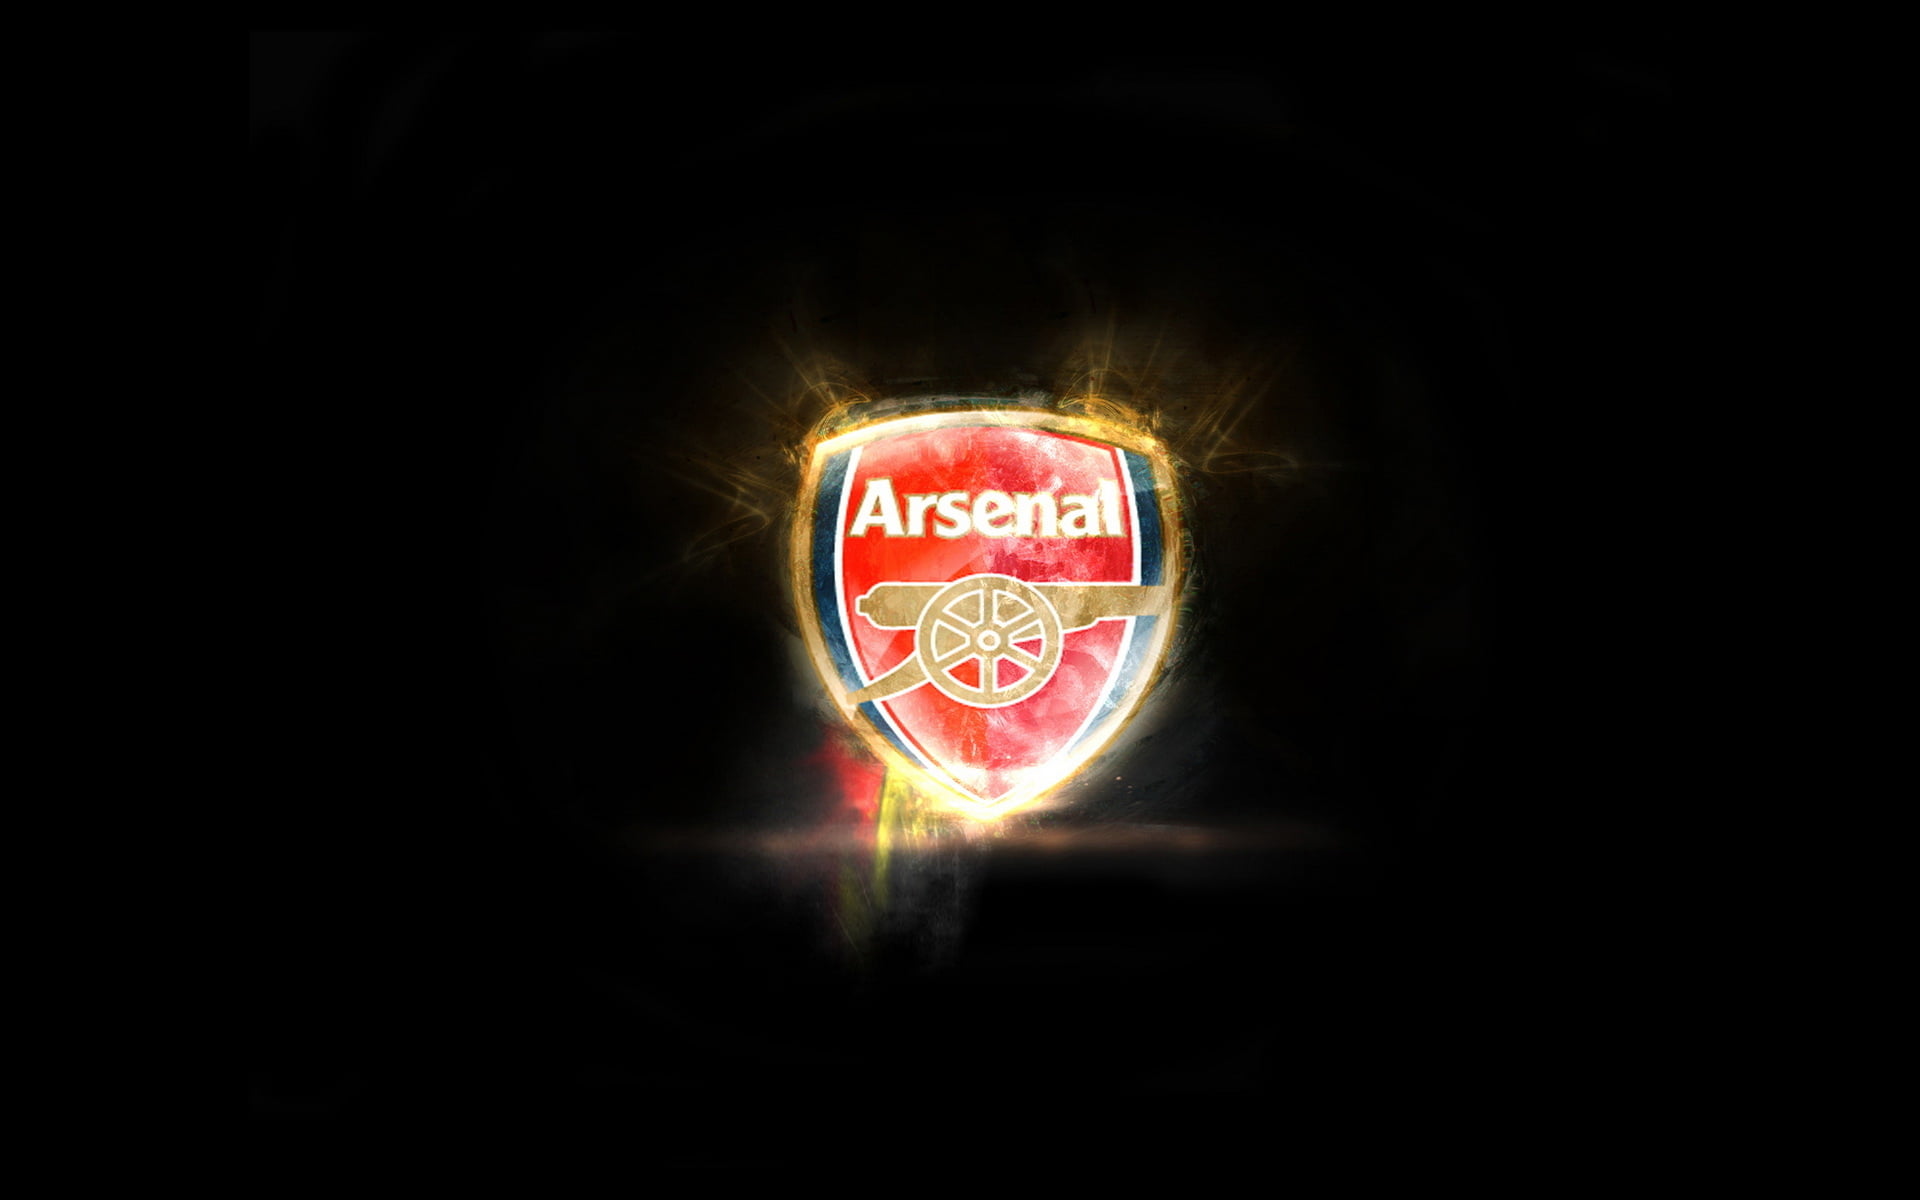 Arsenal logo, football, sport, text, black background, illuminated